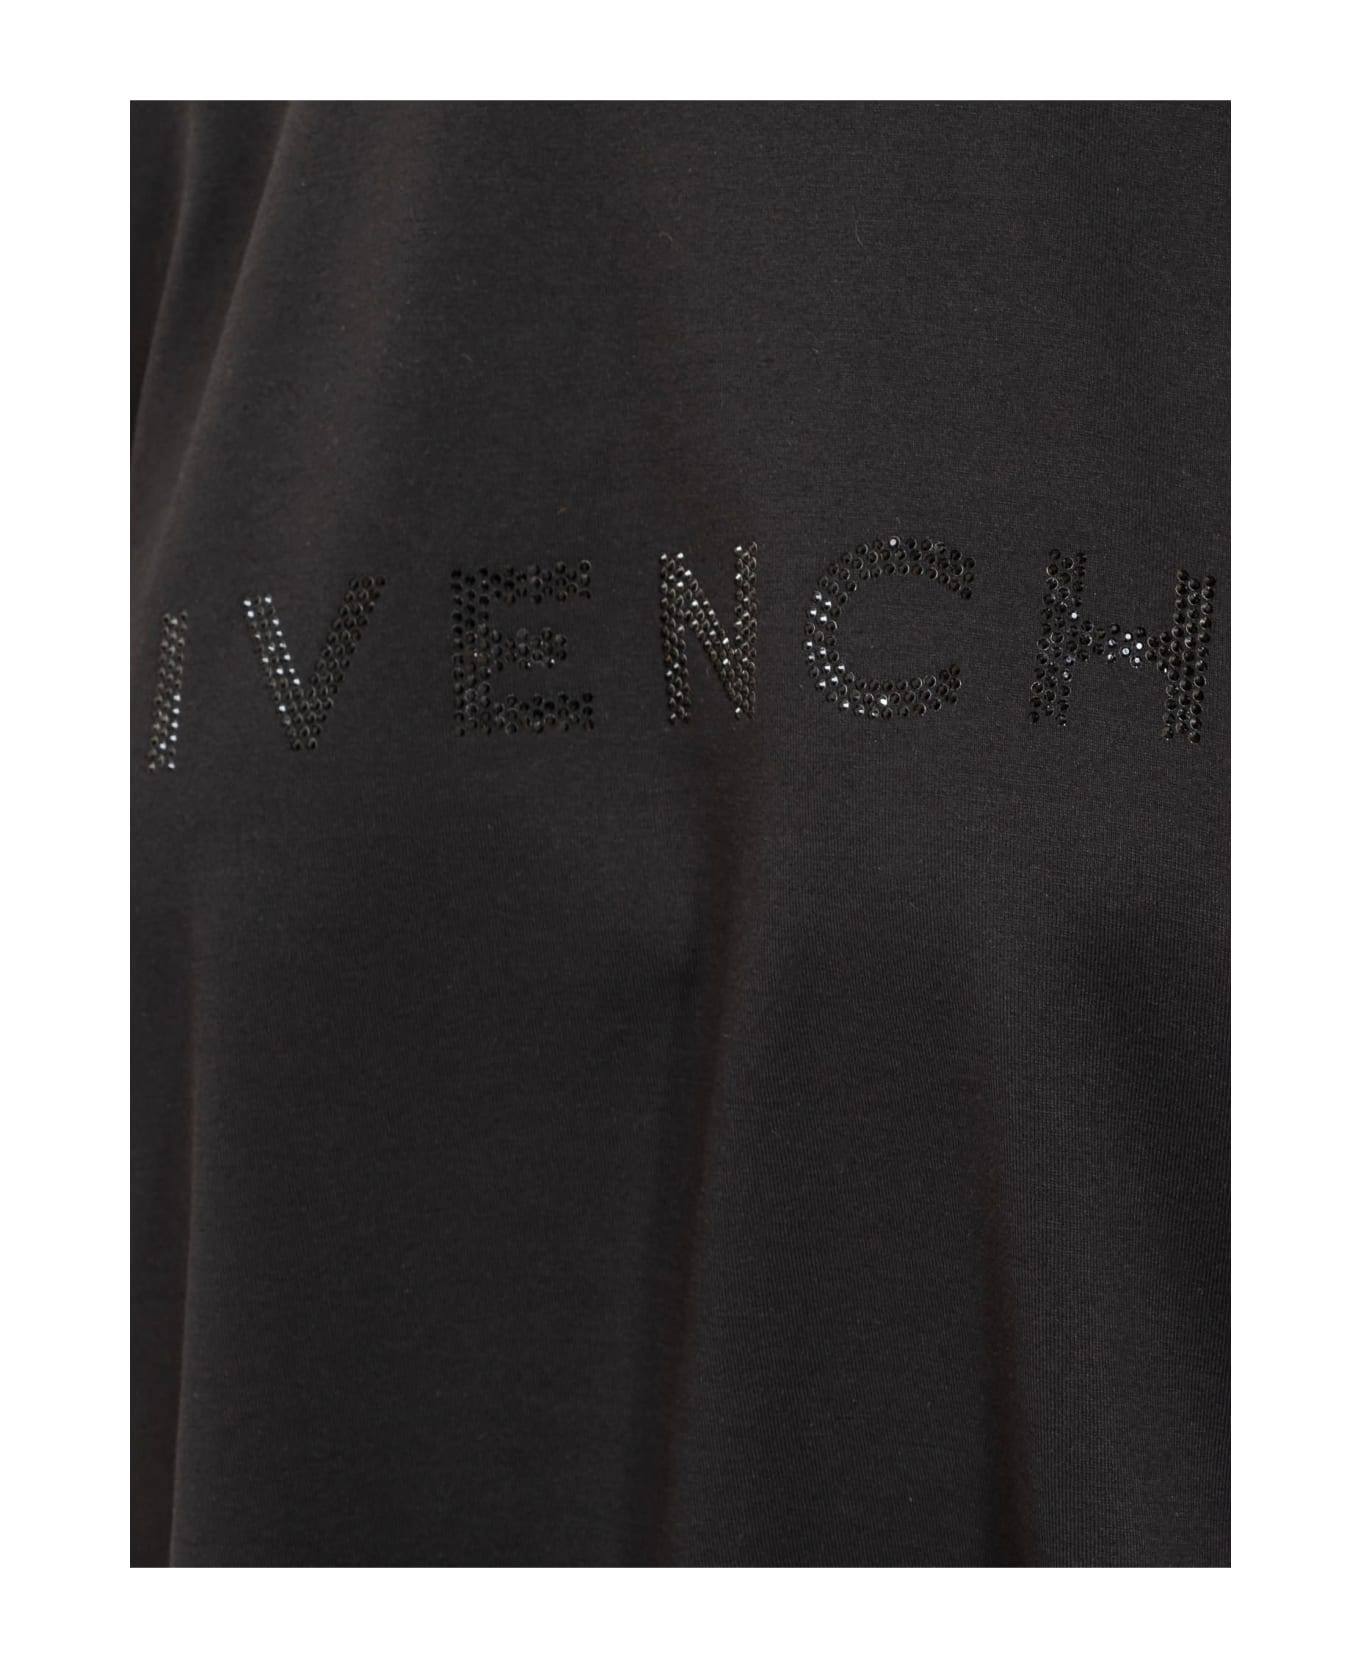 Givenchy Rhinestone T-shirt - Black